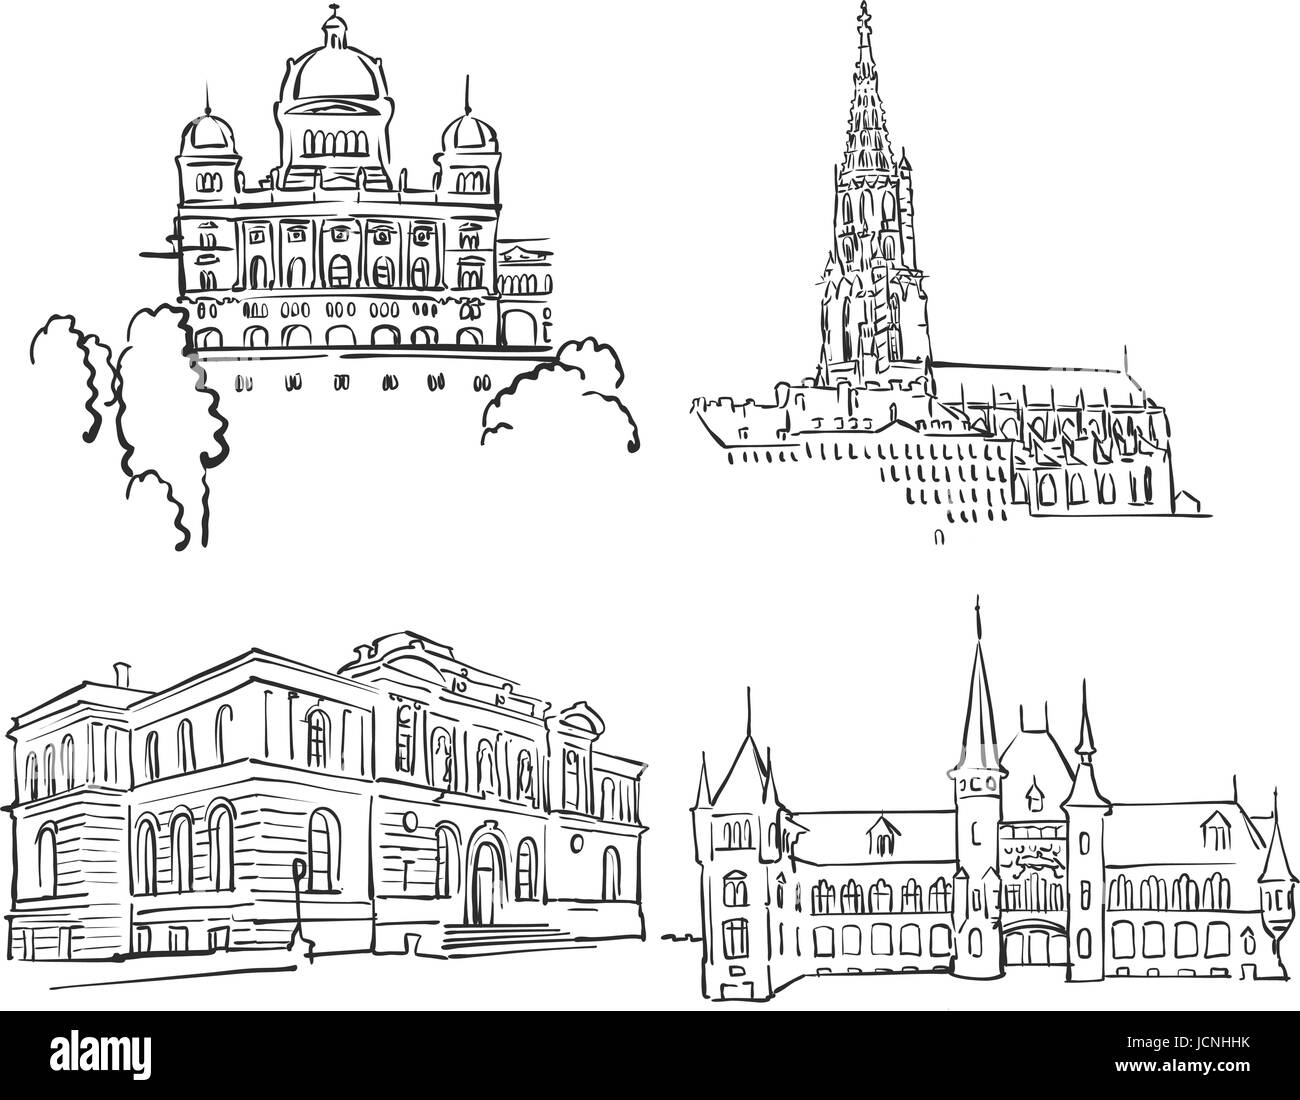 Bern-berühmte Bauwerke, Monochrome skizzierten Reisen Sehenswürdigkeiten, skalierbare Vektor-Illustration Stock Vektor